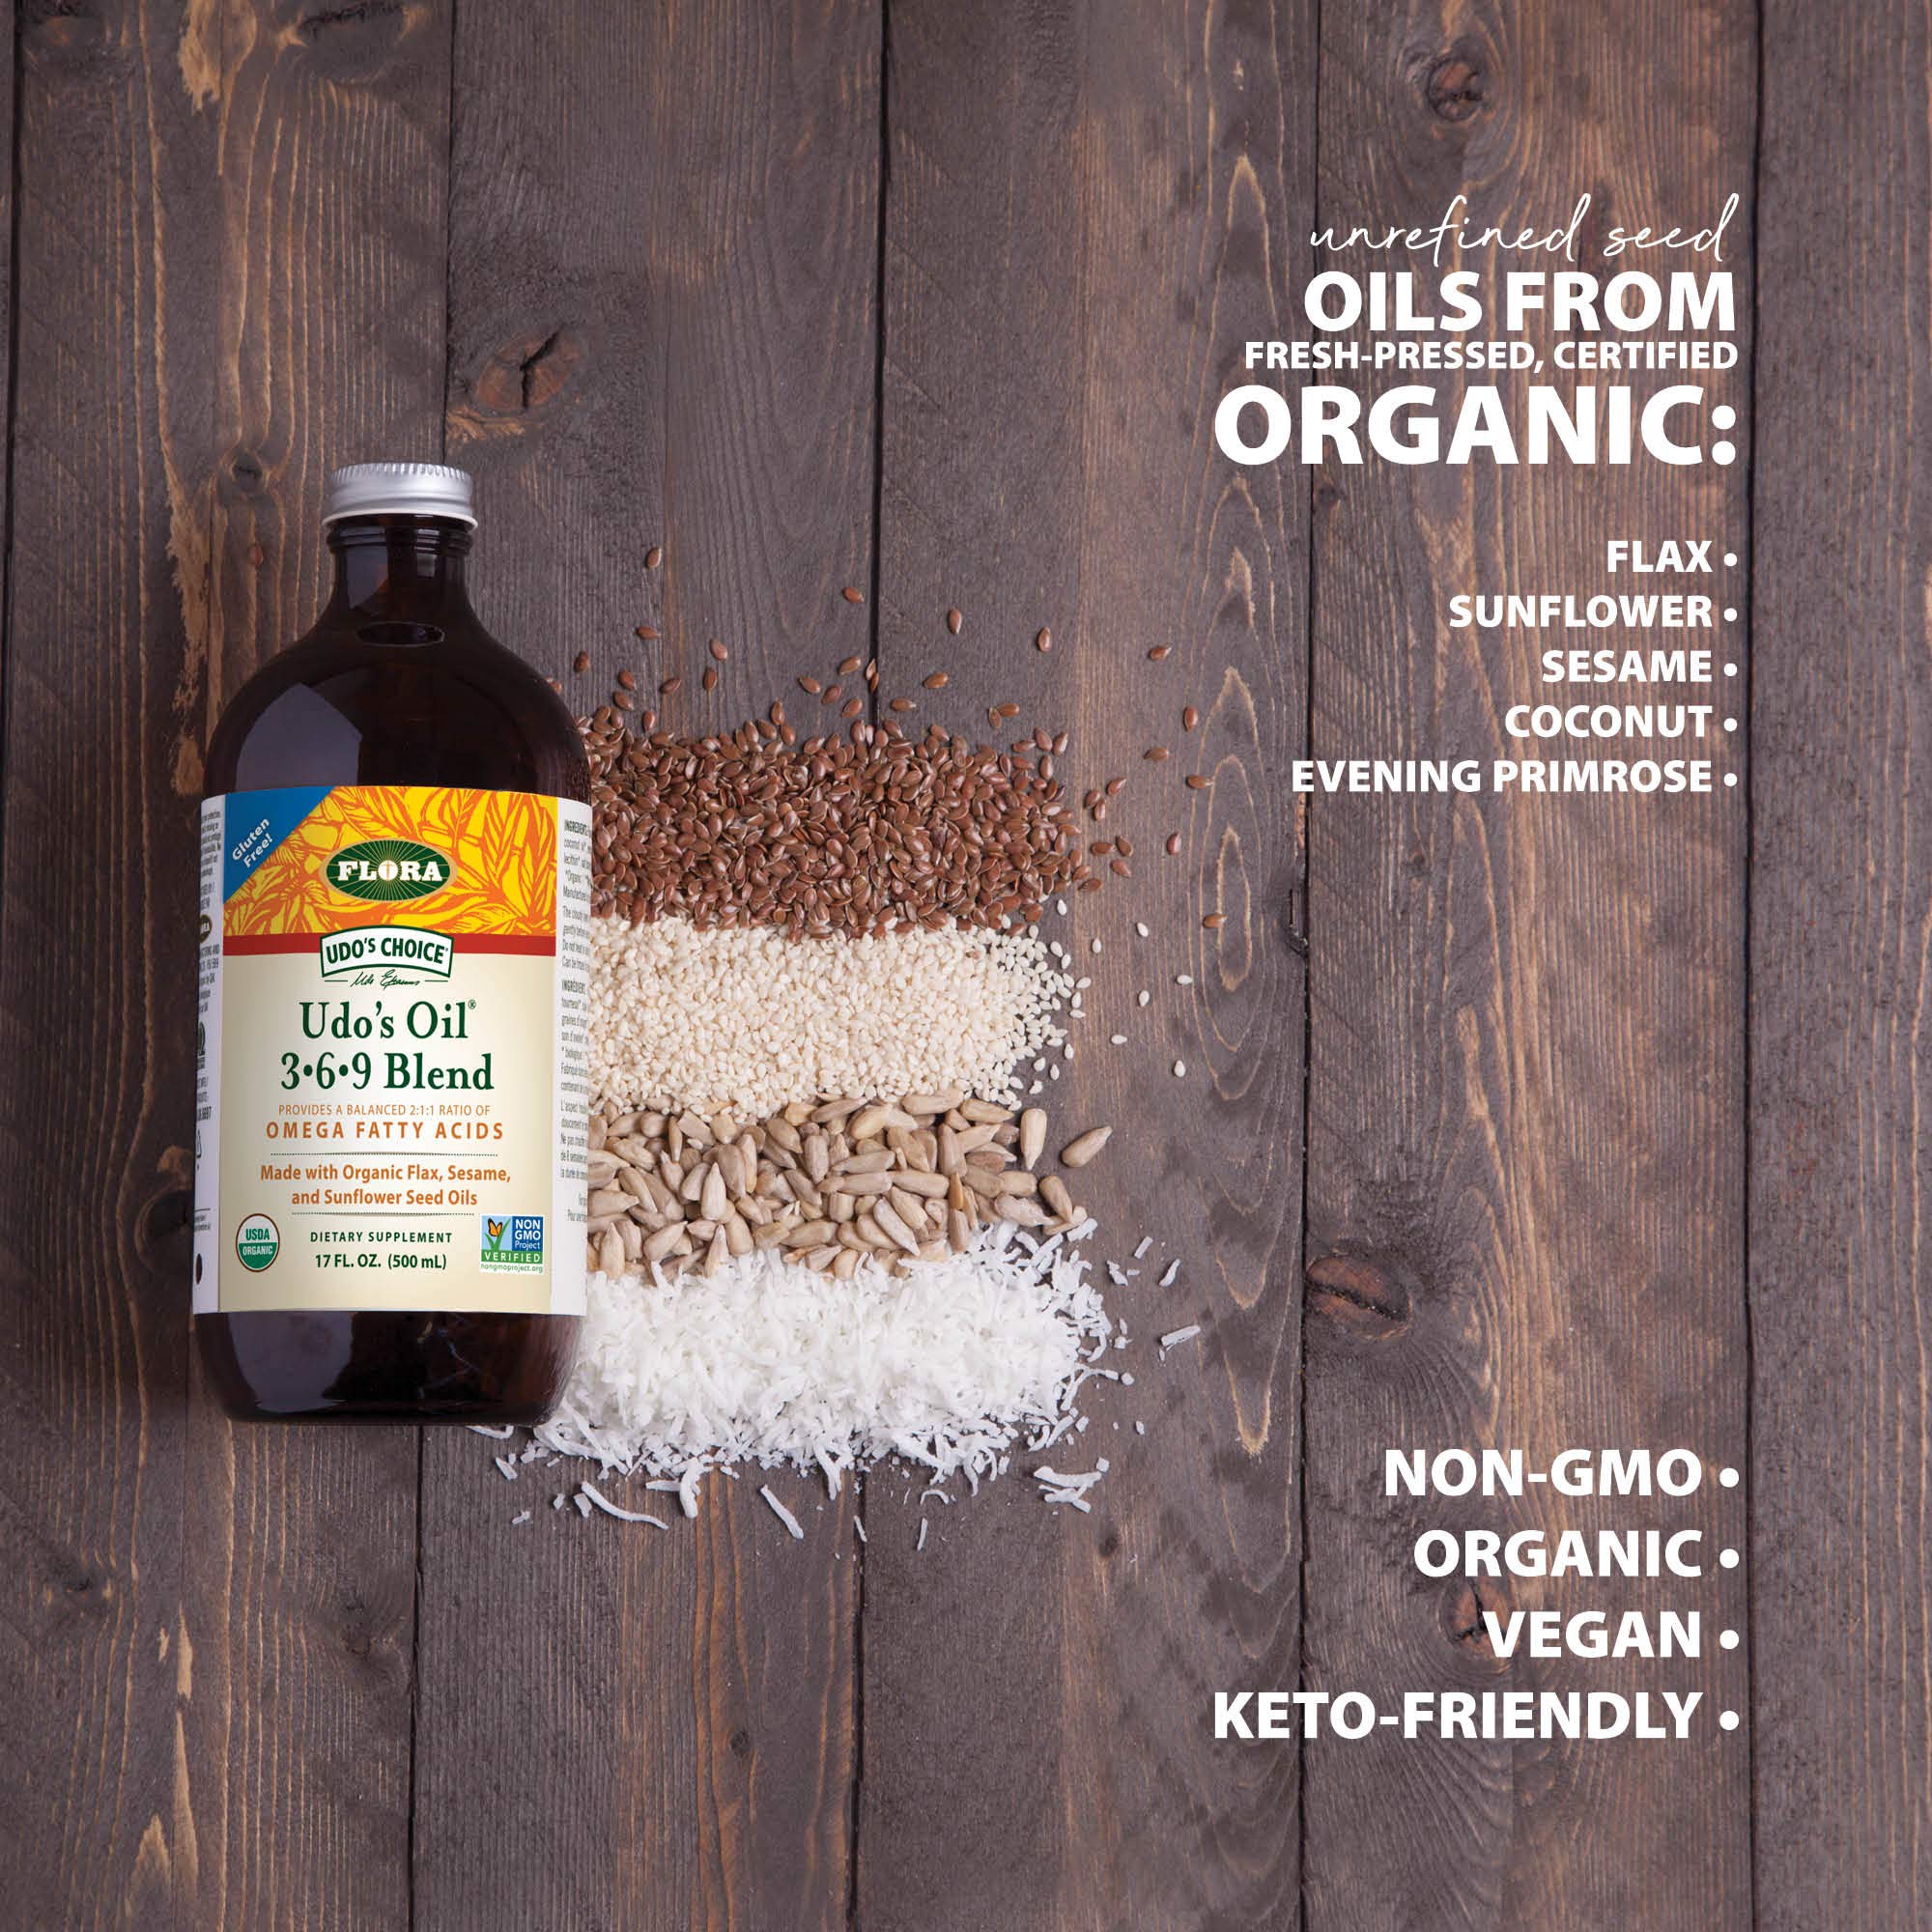 Flora - Udo's Choice Omega 369 Oil Blend, Made with Organic Flax, Sesame & Sunflower Seed Oils, Plant-Based Vegan Omega Fatty Acids, Based on Ideal 2:1:1 Ratio, 8.5-fl. oz. Glass Bottle